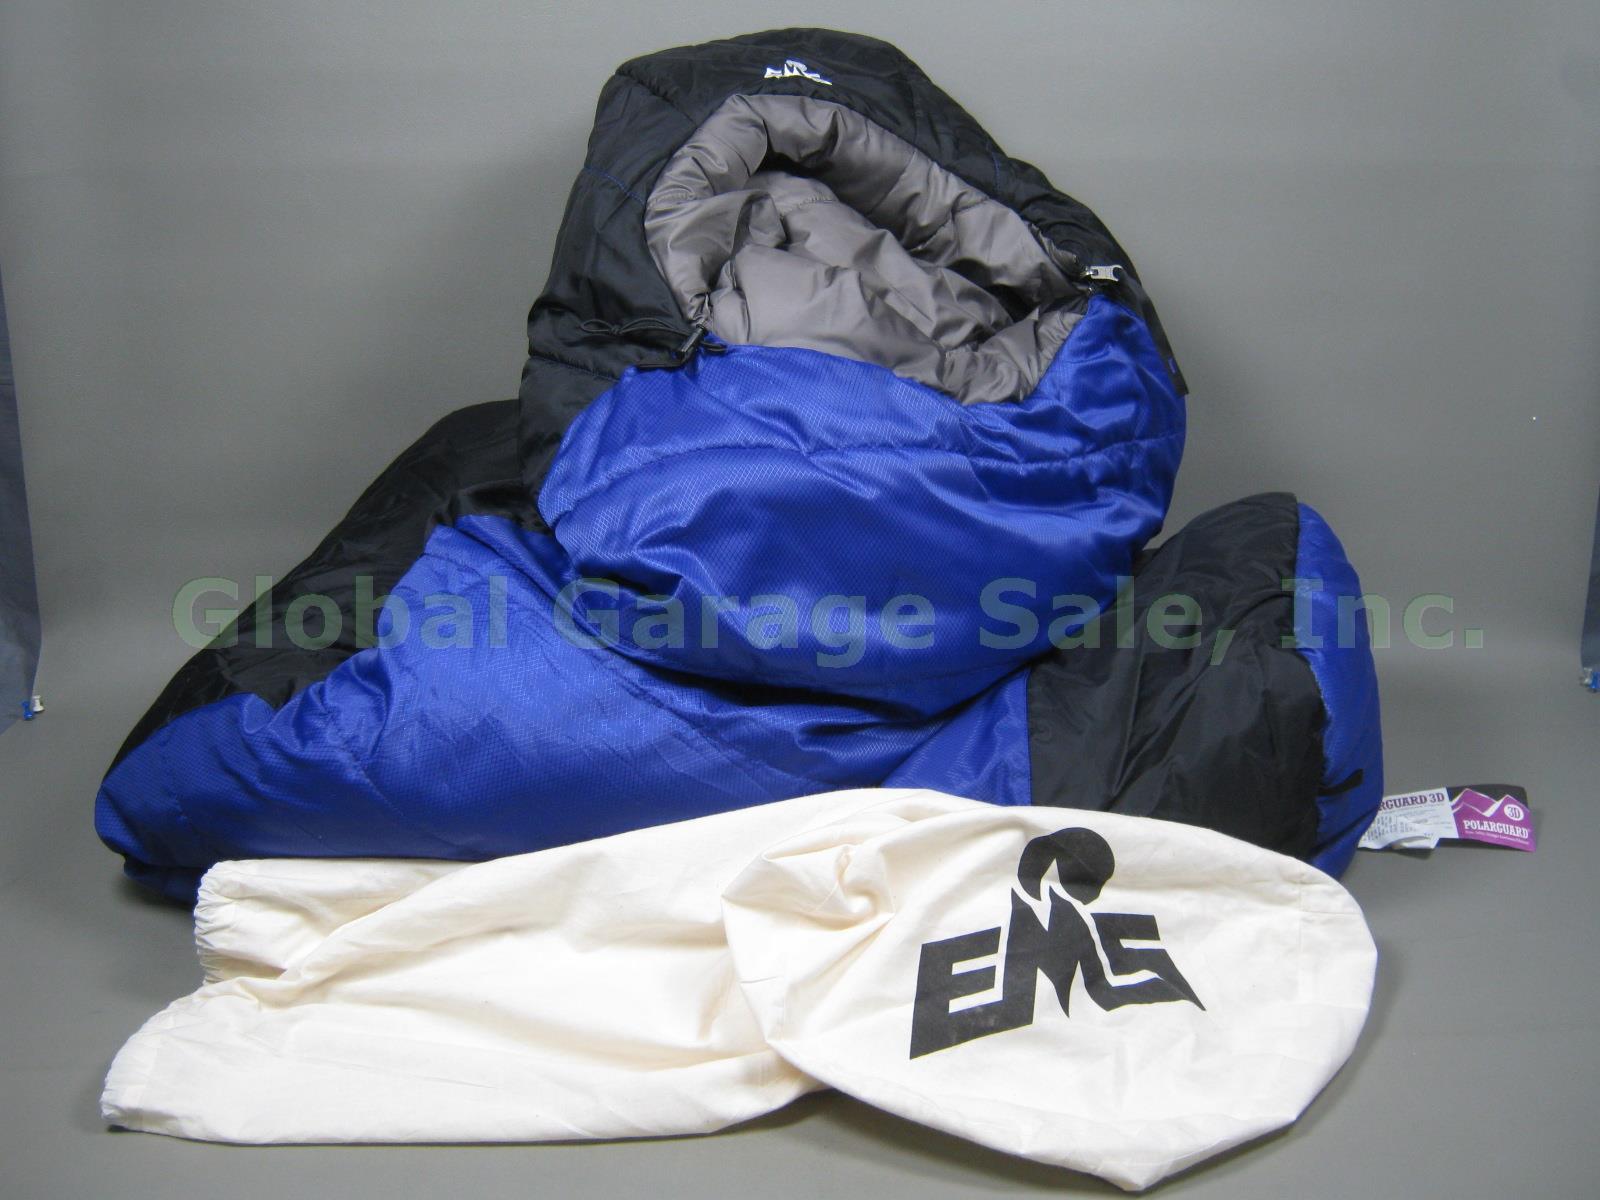 NEW Womens Eastern Mountain Sports EMS Boreal 20 Degree Mummy Sleeping Bag Left